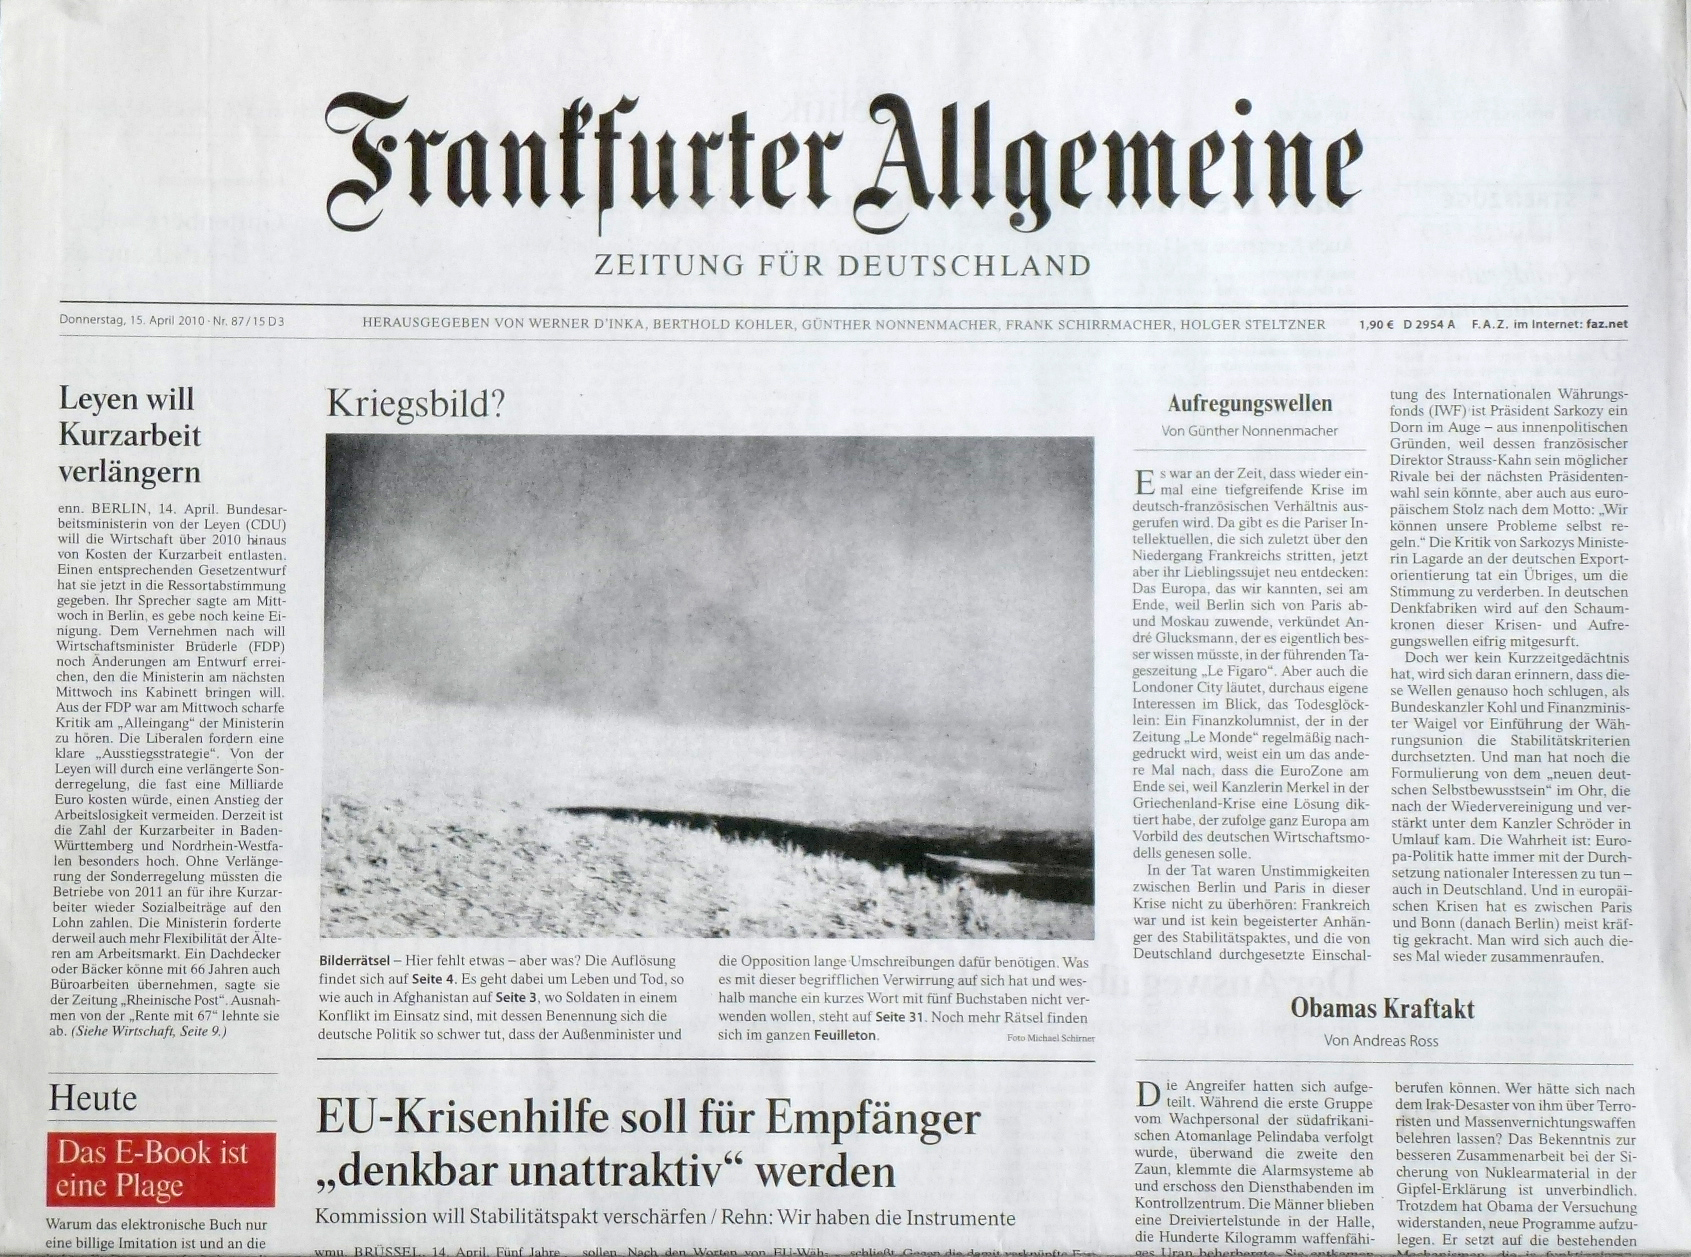 Frankfurter Allgemeine Zeitung, 15. April 2010, Nr. 87 / 15 D3